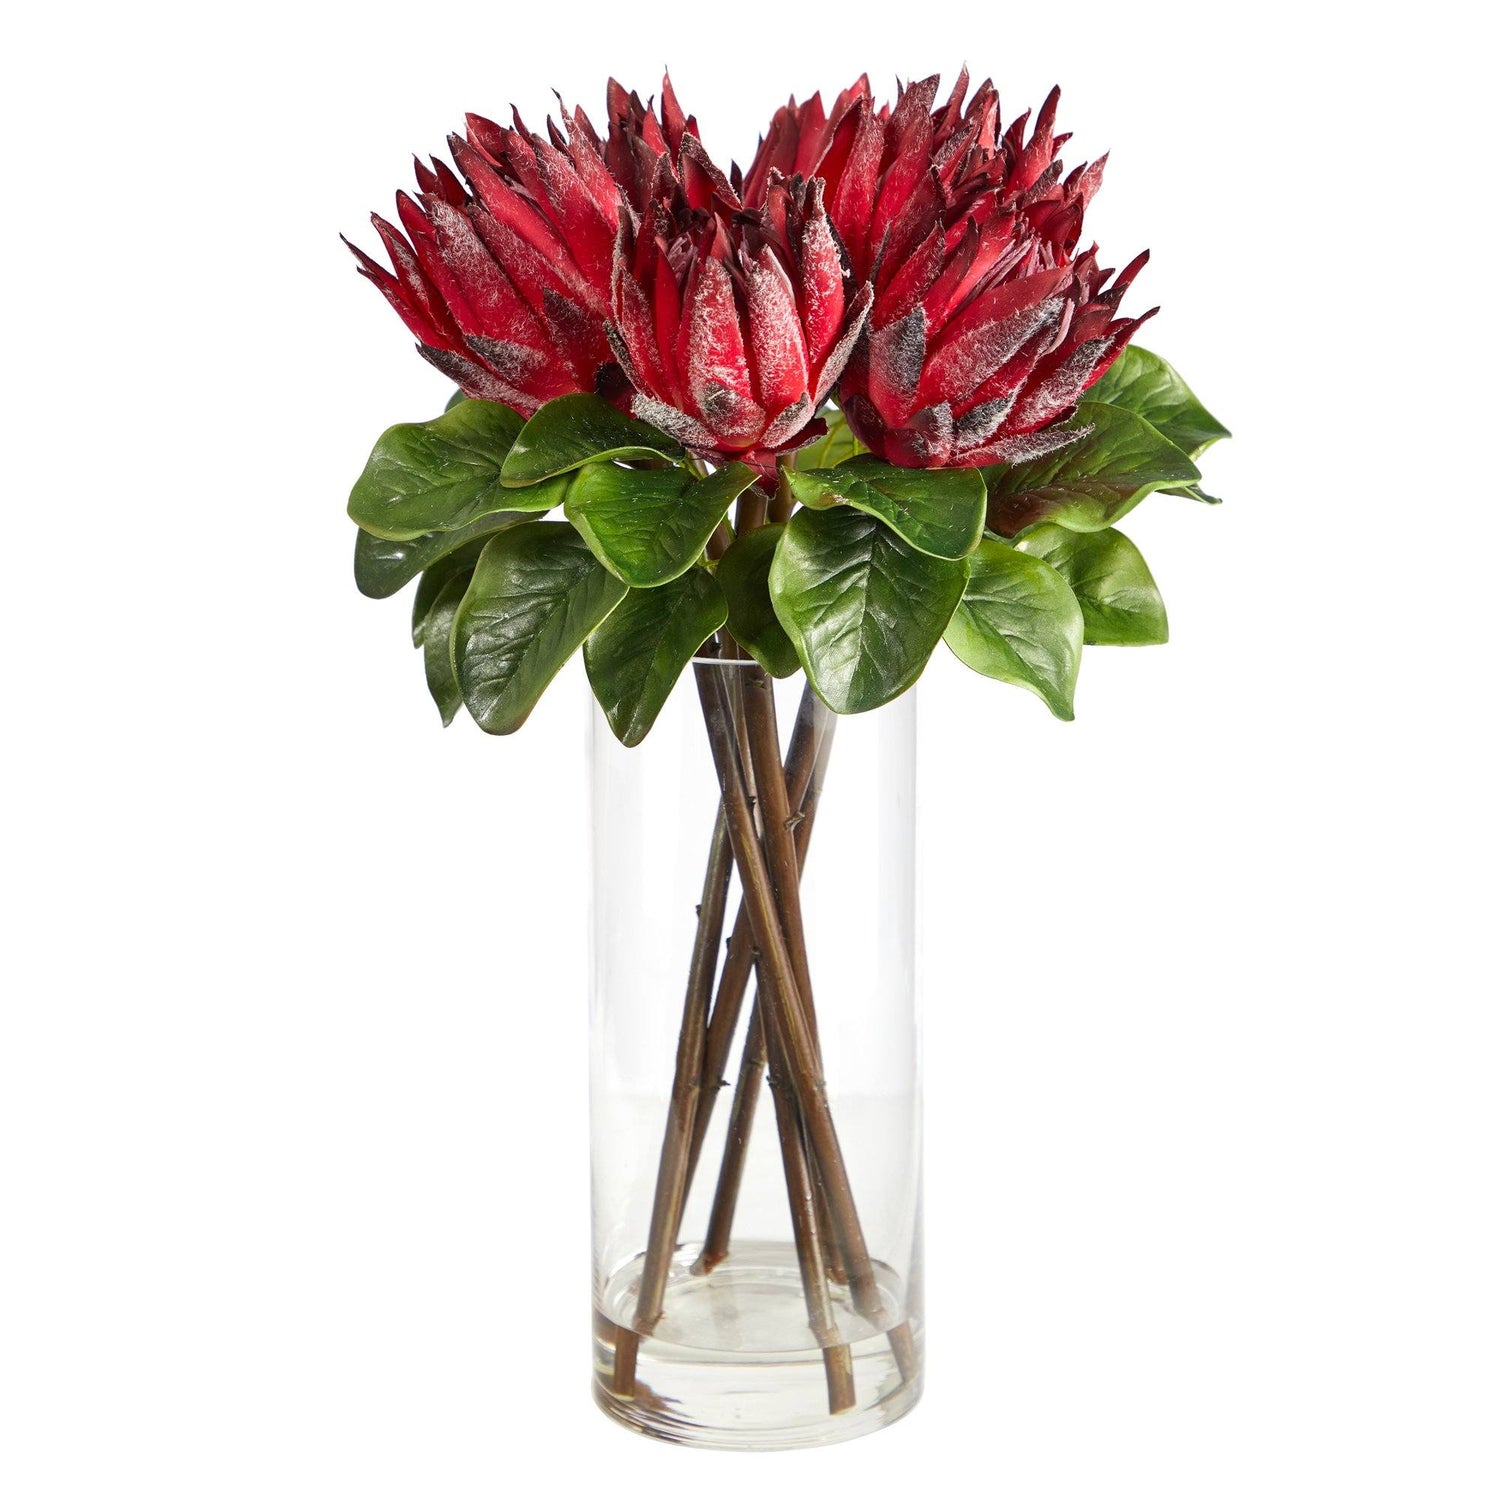 22” King Protea Artificial Arrangement in Glass Vase